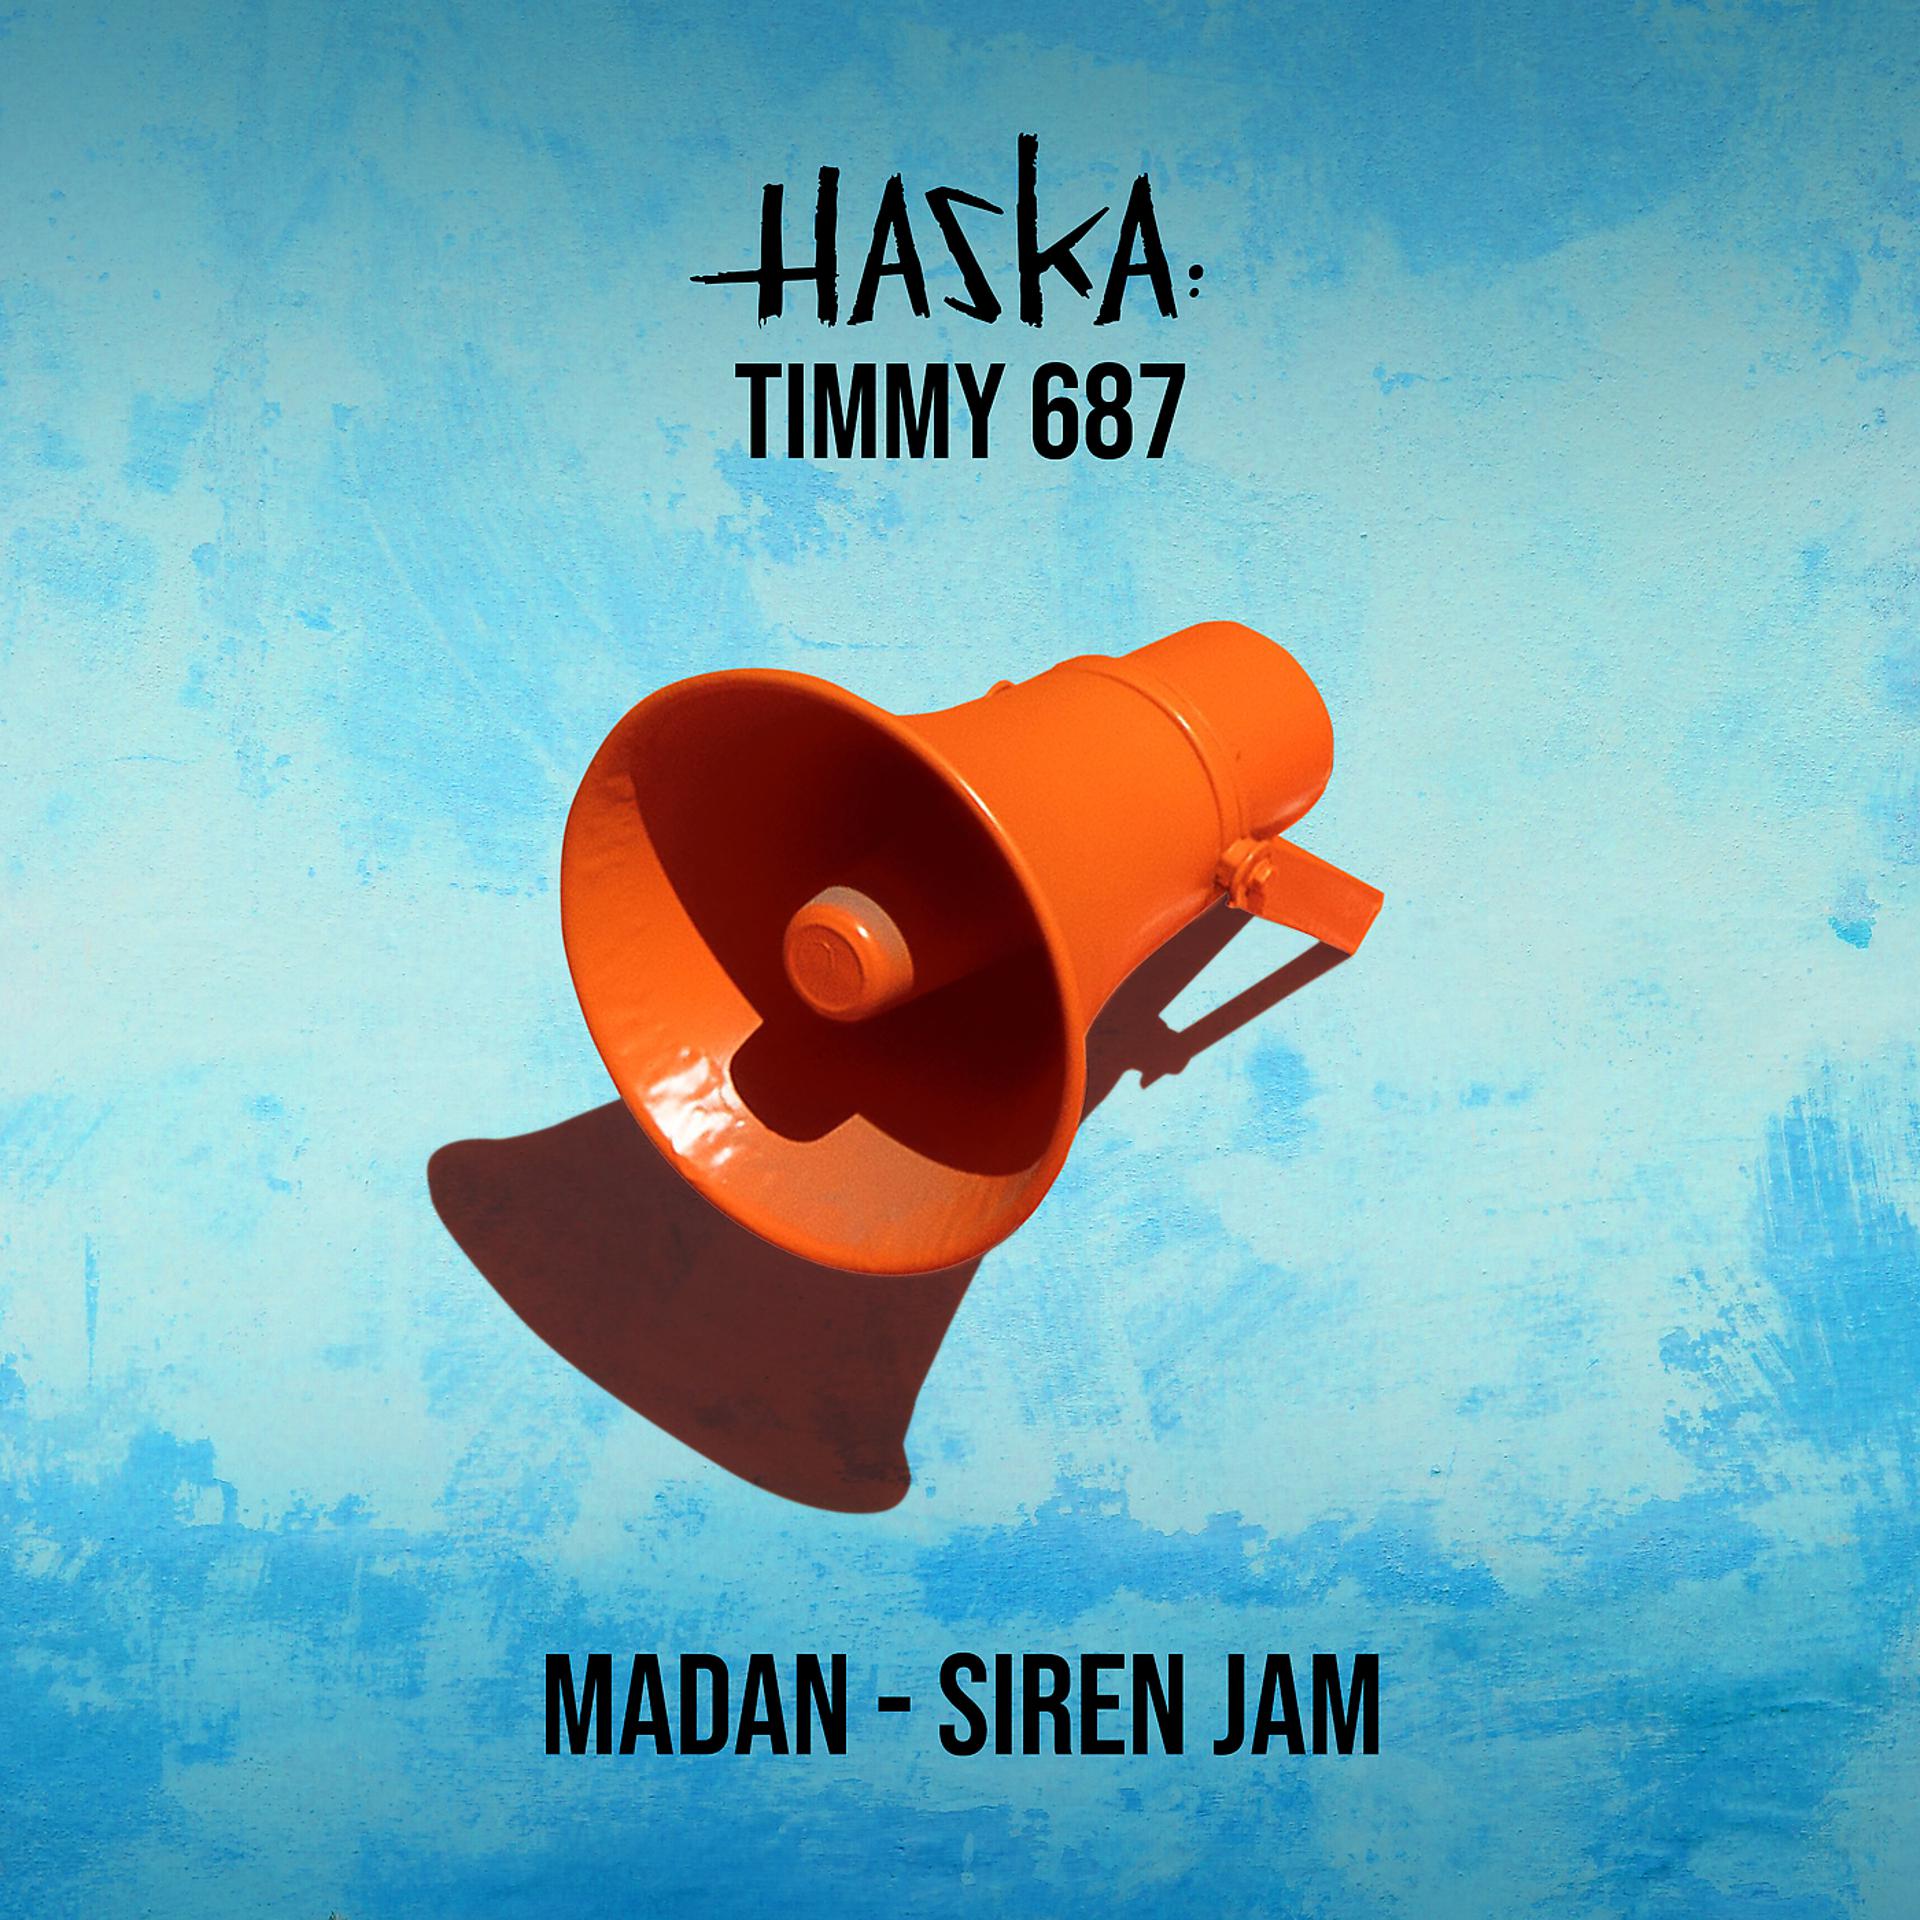 Постер к треку Haska, Timmy687 - Madan (Siren Jam)